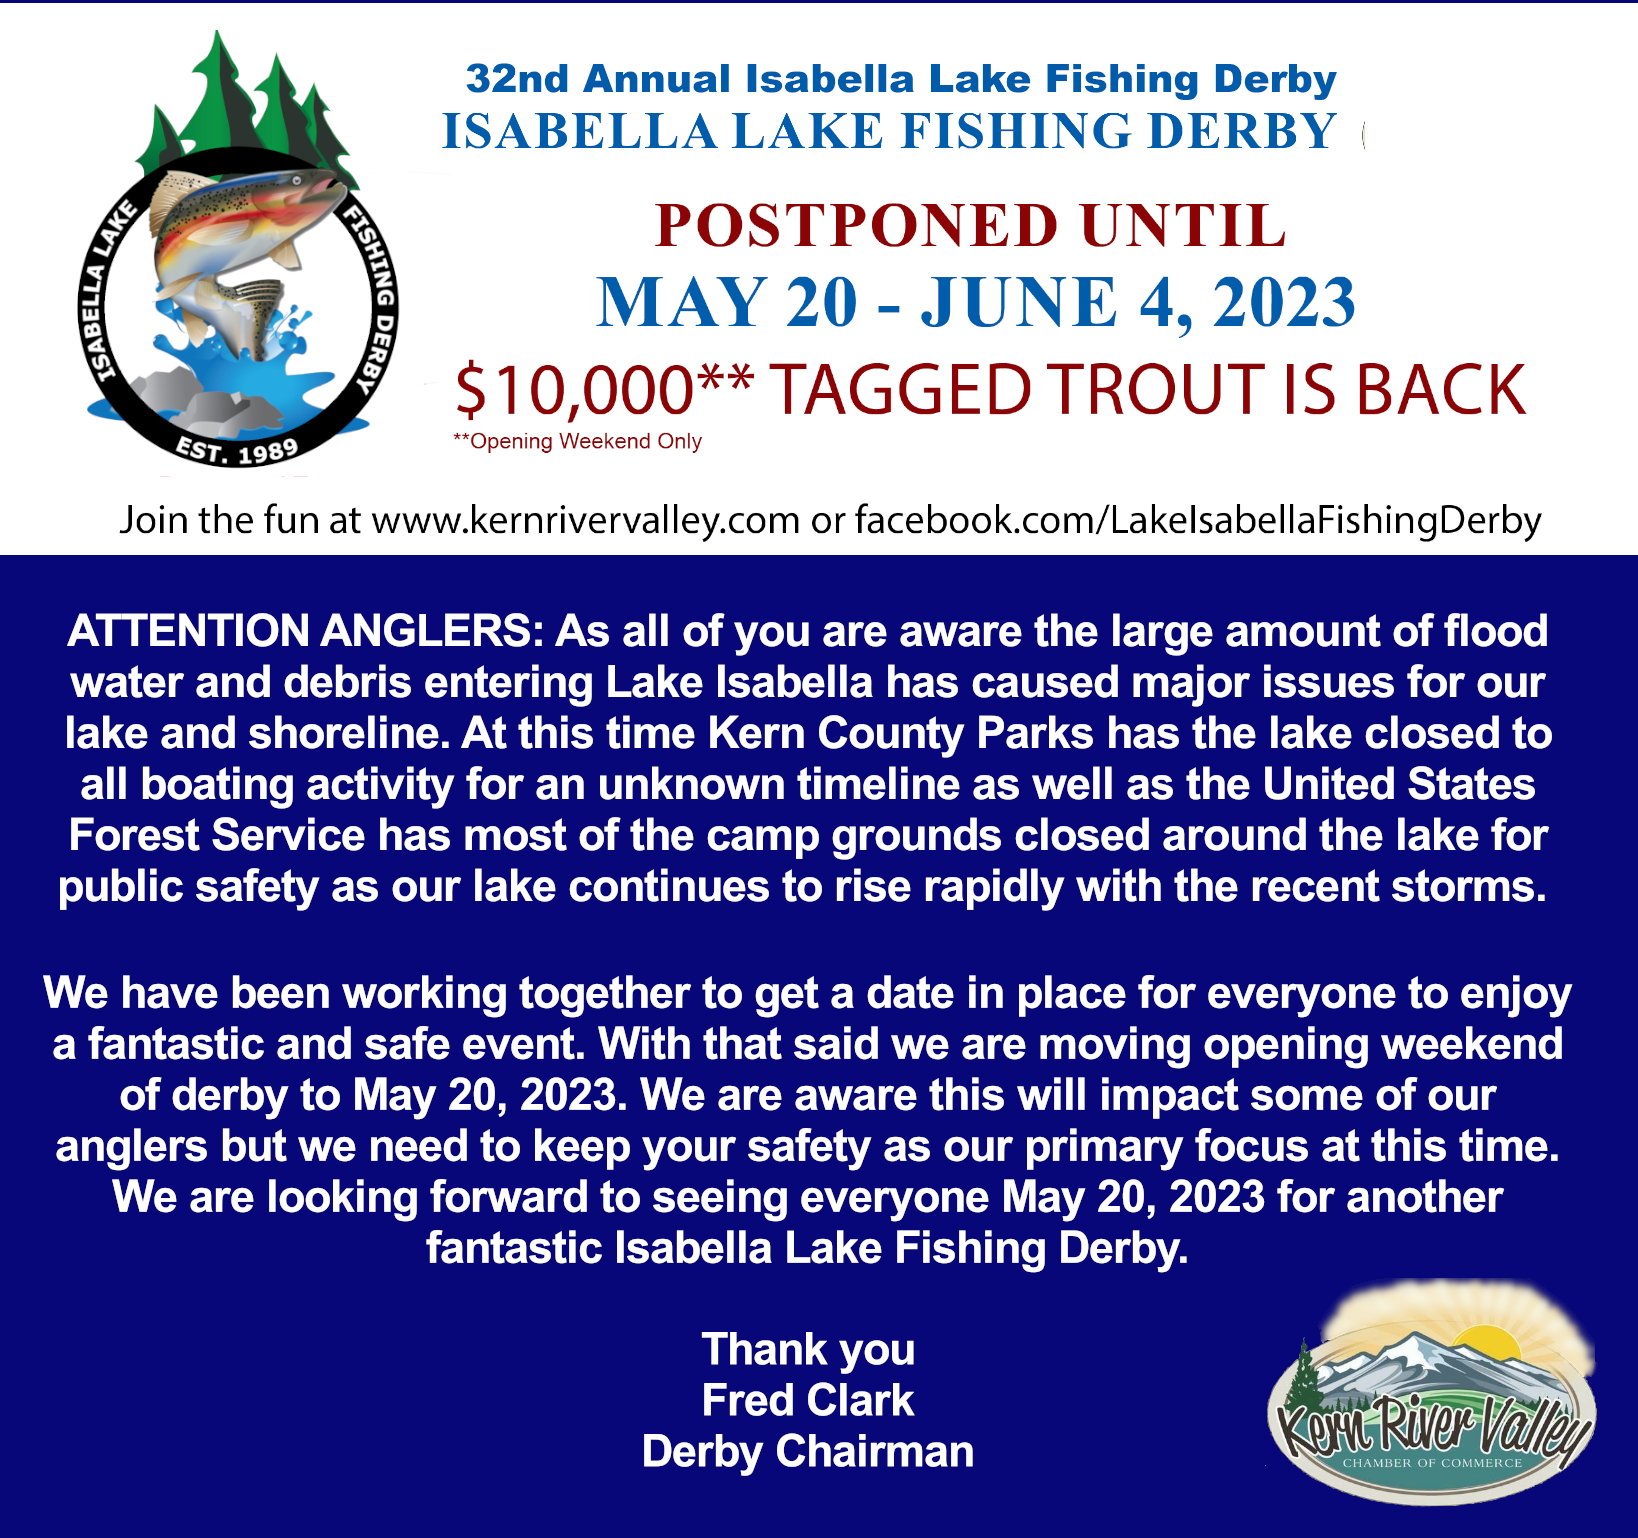 Flooding Concerns Prompt Isabella Lake Fishing Derby Postponement To